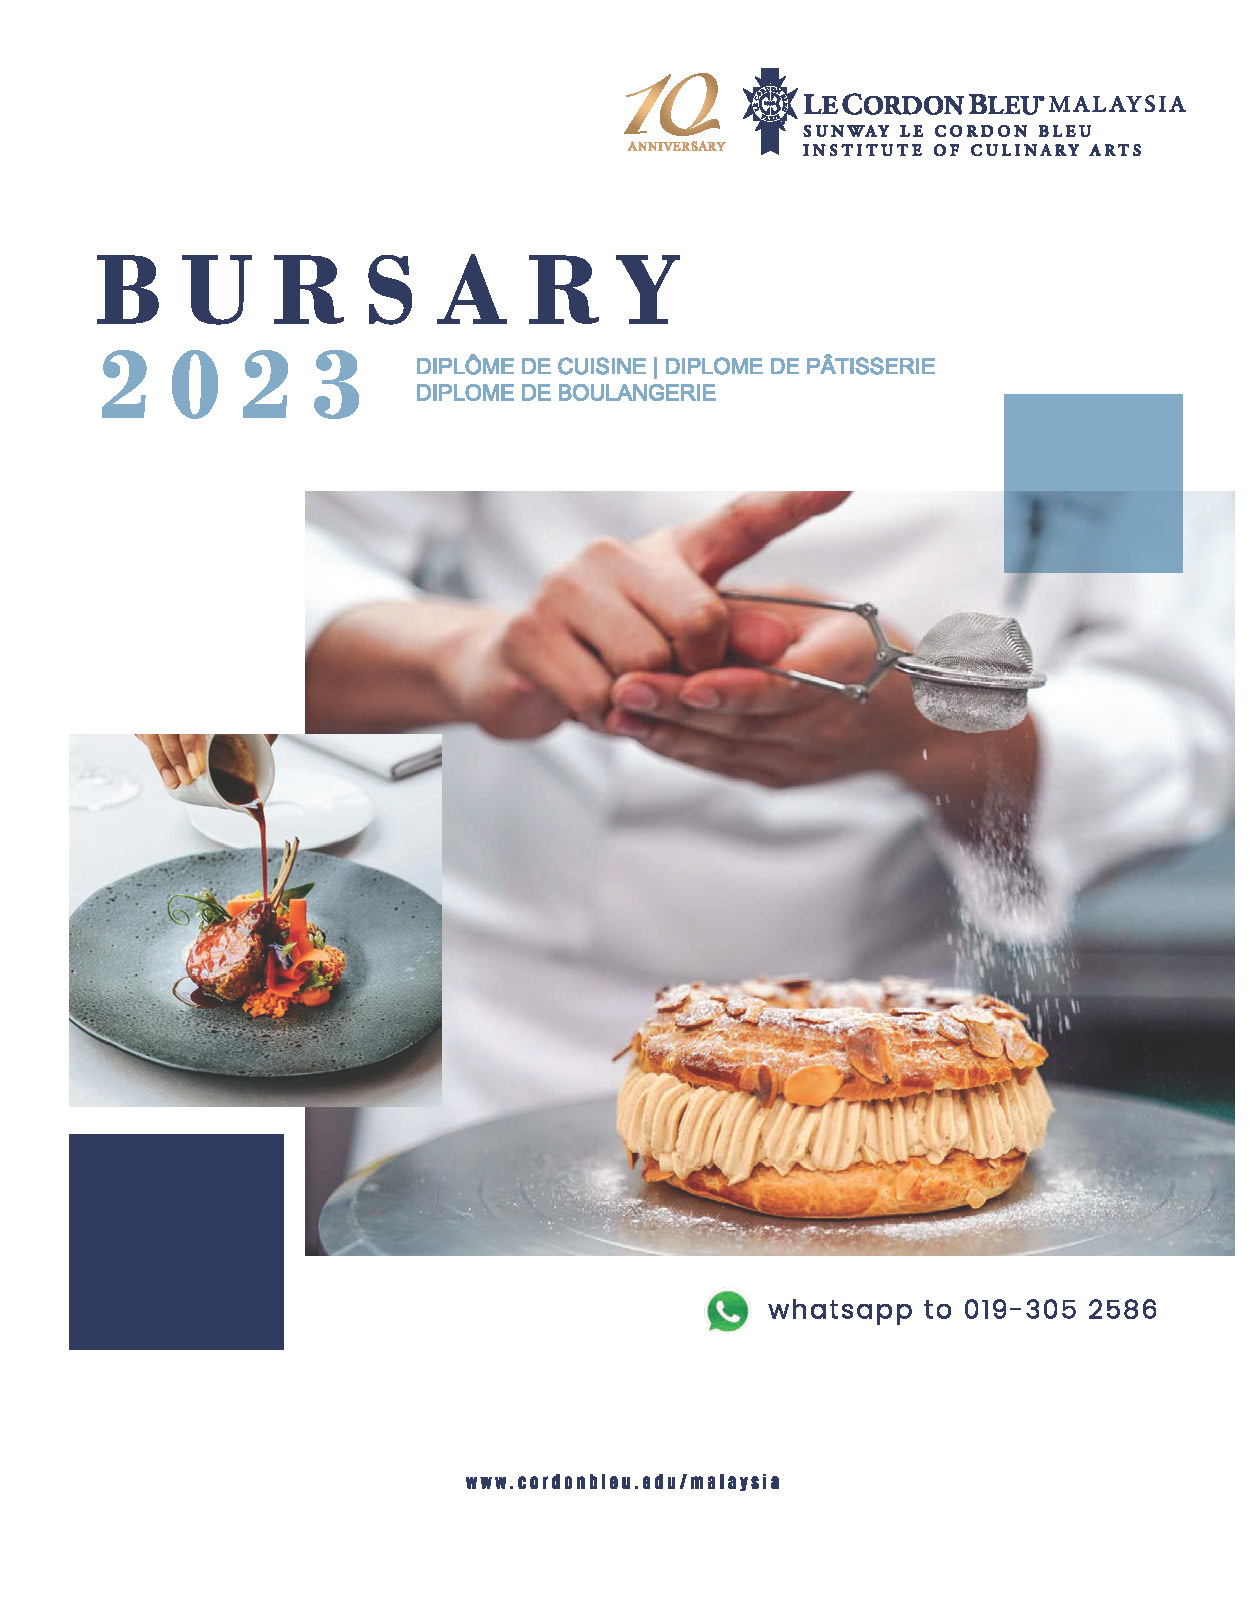 Le Cordon Bleu - Bursary 2023